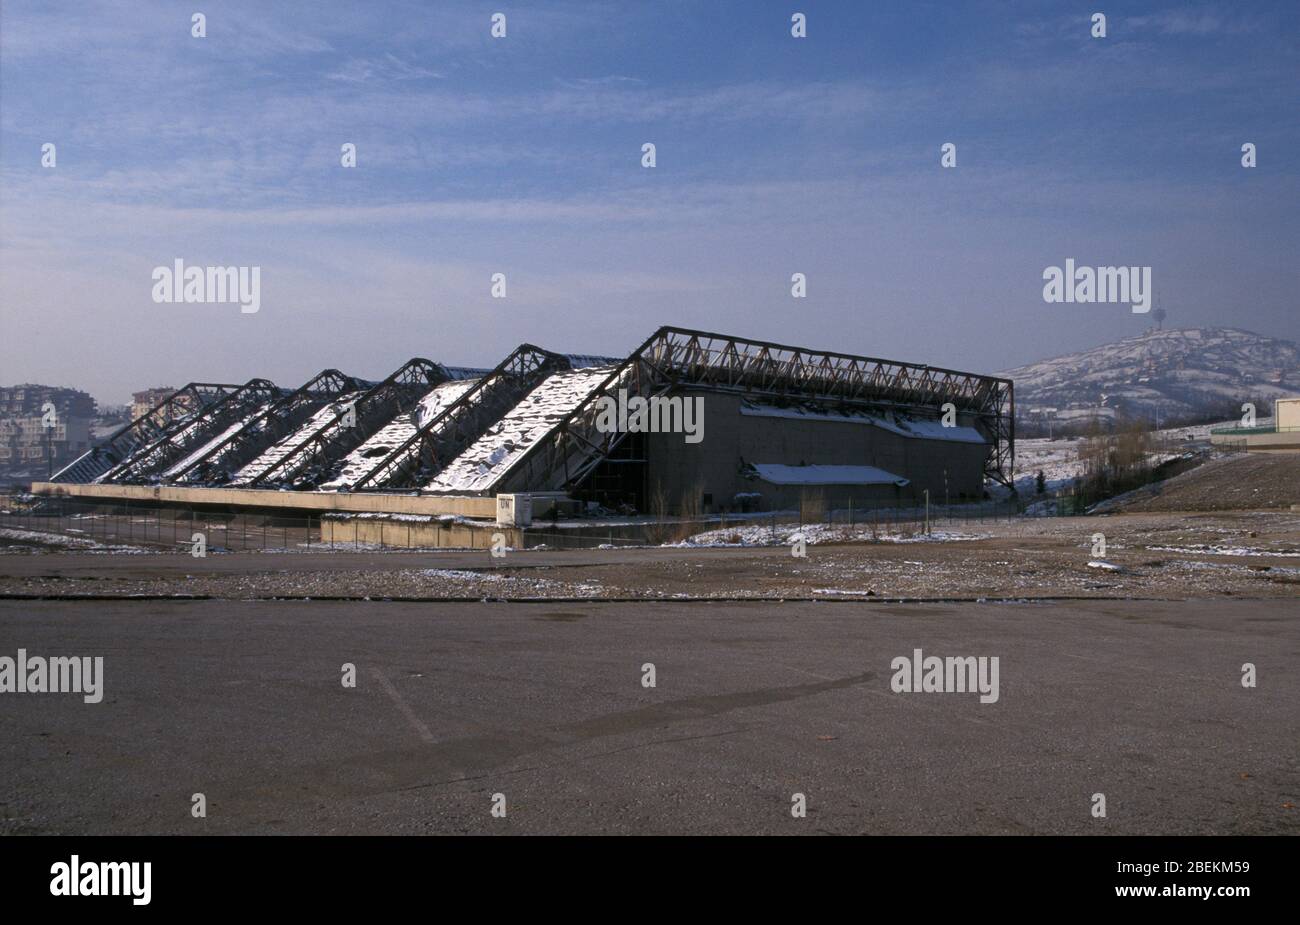 Sarajevo 1998 - war damaged Zetra Olympic stadium, used for 1984 Olympics in Sarajevo, Bosnia and Herzegovina Stock Photo